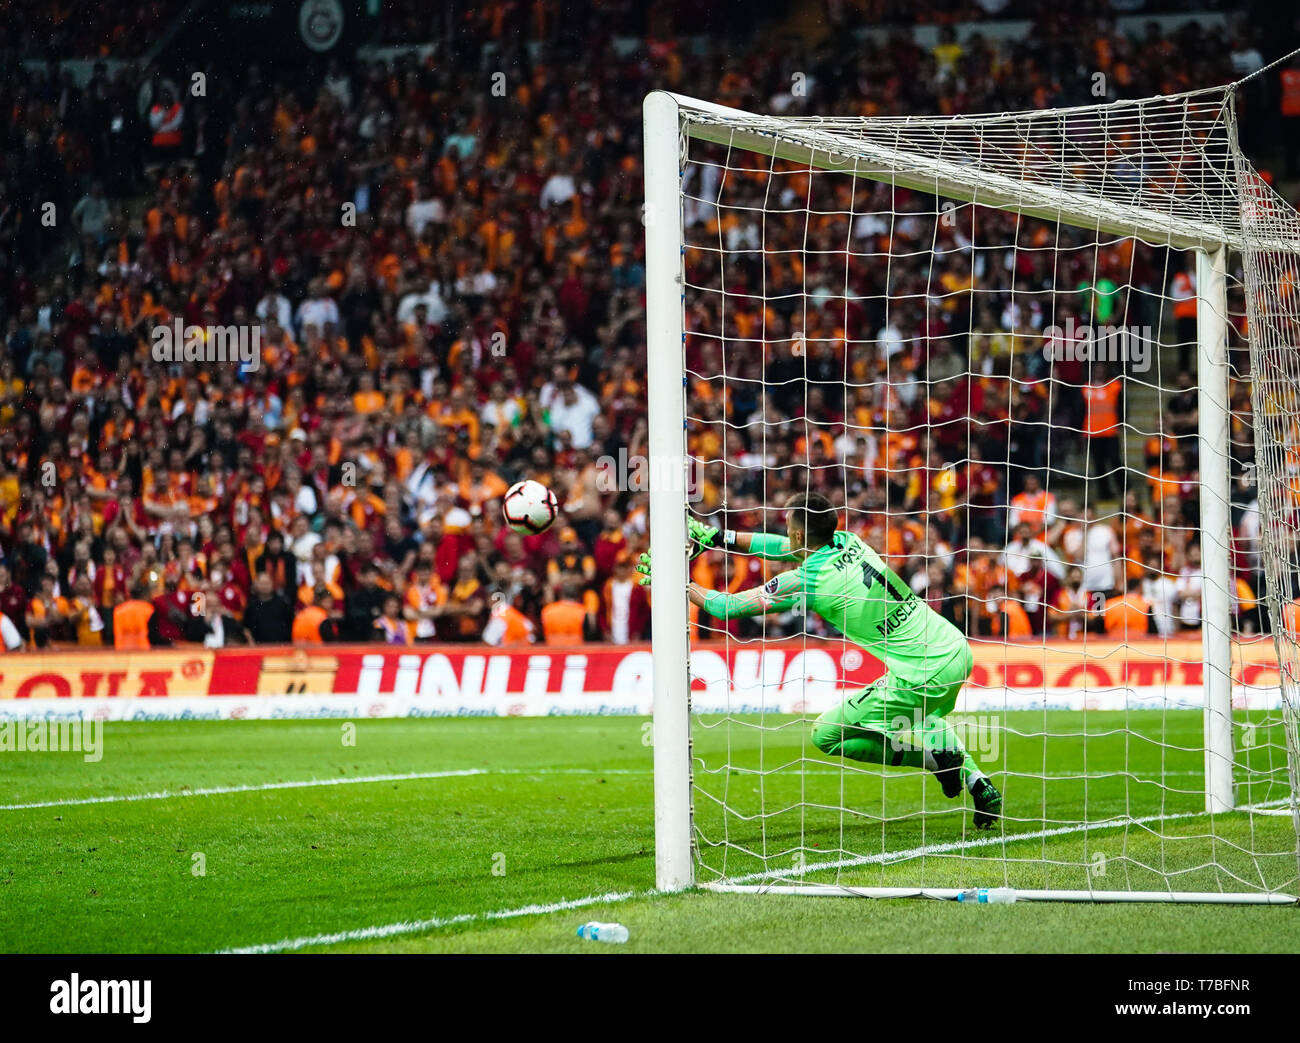 Istanbul, Turkey. 5th May, 2019. Fernando Muslera of Galatasaray saving a  ball during the Turkish Super Lig match between Galatasaray S.K. and  Besiktas at the TÃ¼rk Telekom Arena in Istanbul, Turkey. Ulrik